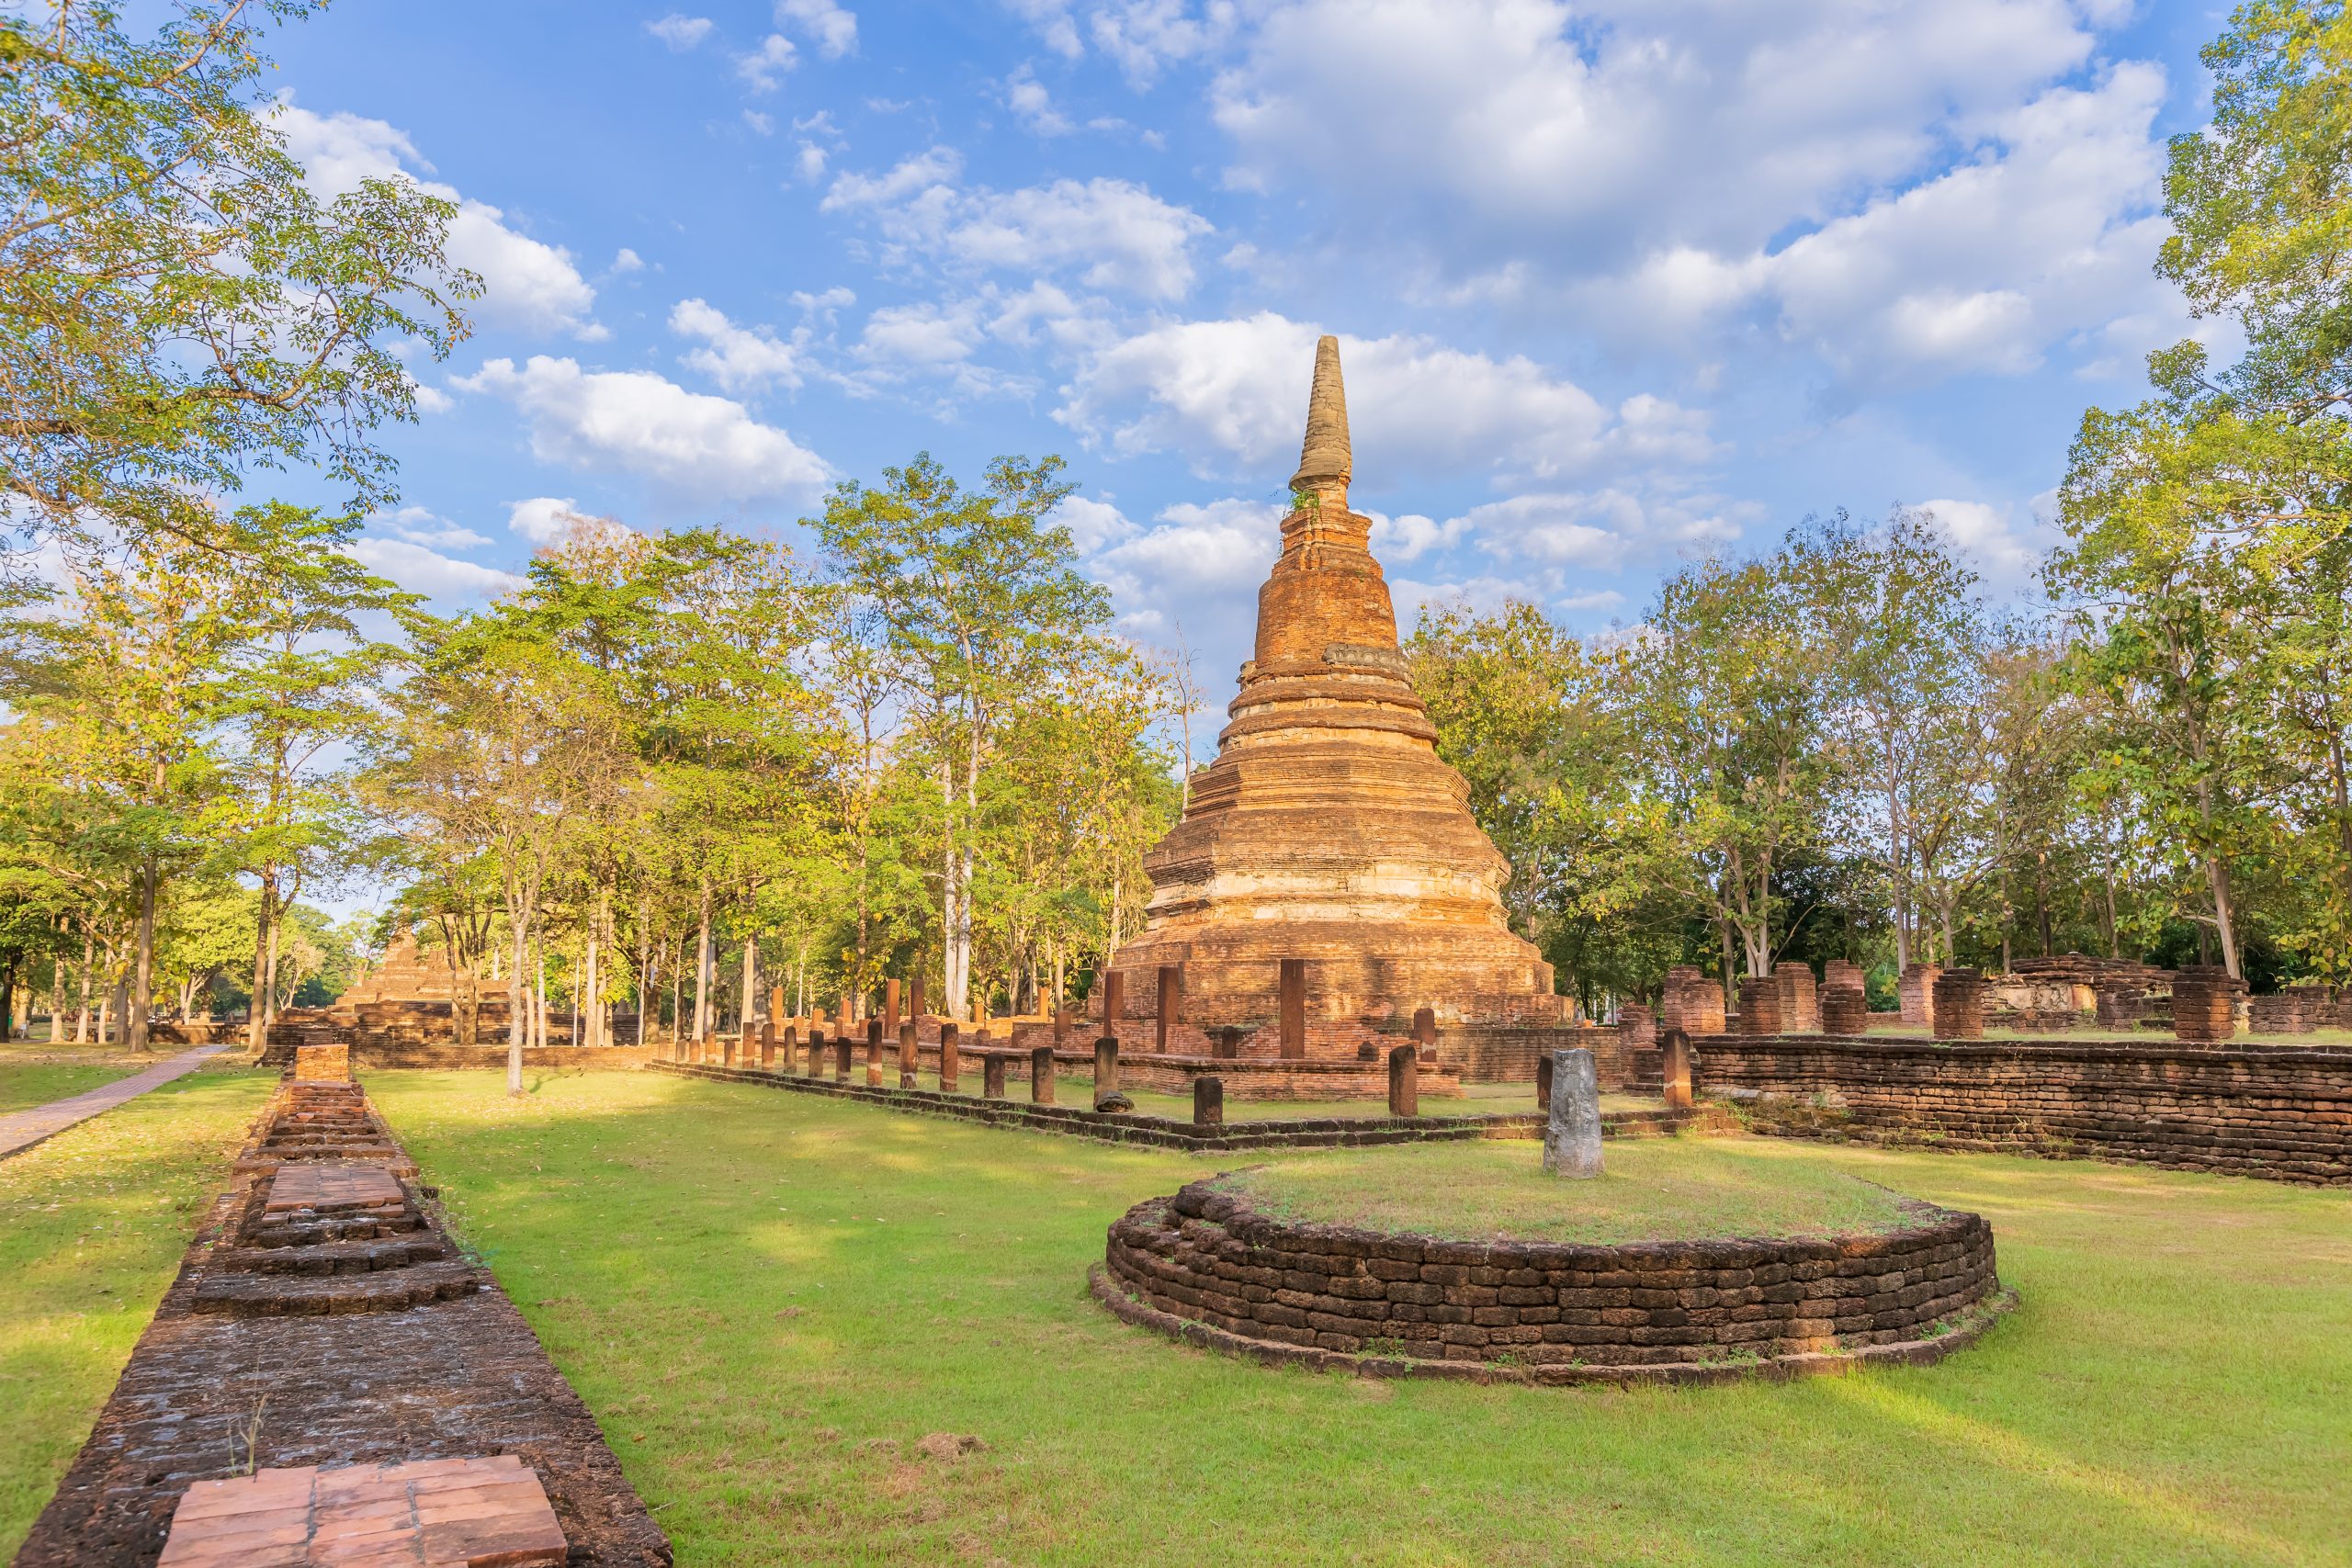 Wat Phra That temple in Kamphaeng Phet Historical Park, UNESCO World Heritage site